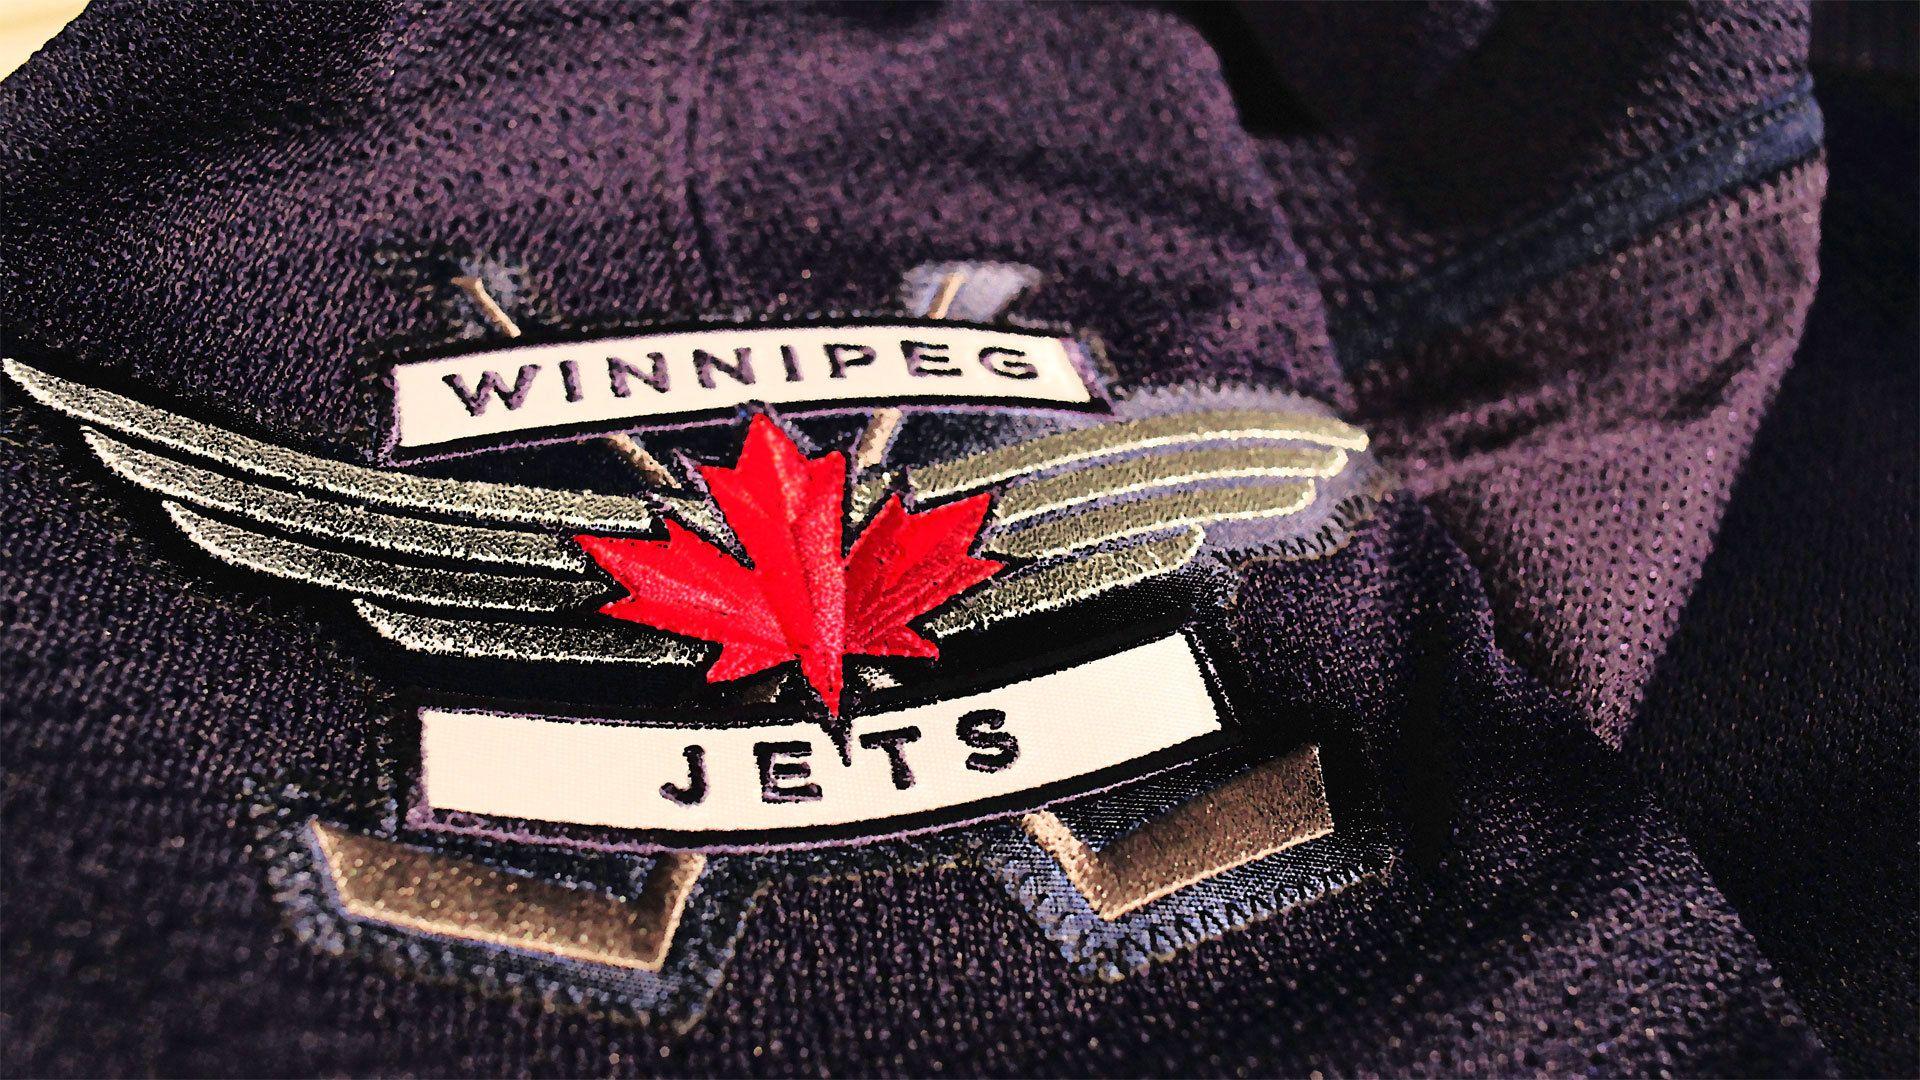 Winnipeg Jets Wallpaper, Good Picture of Winnipeg Jets HDQ Cover